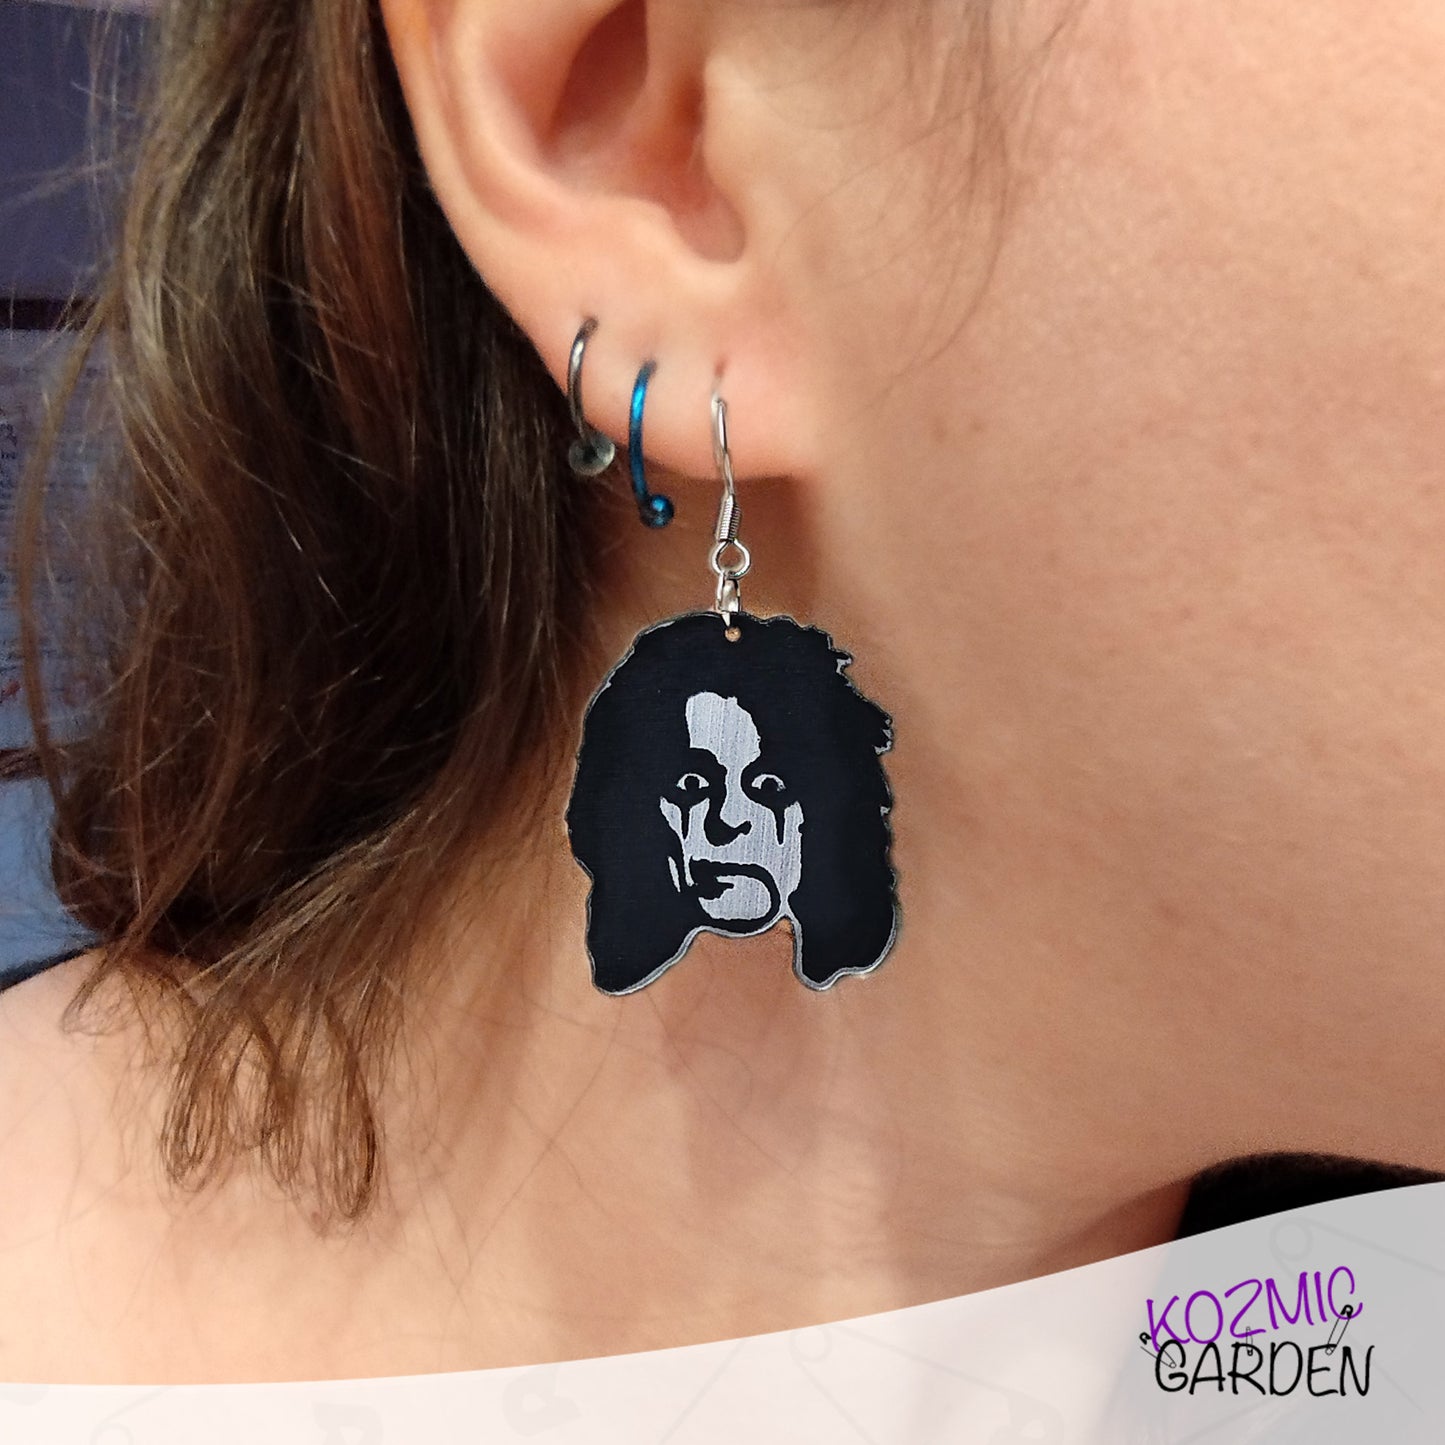 Alice Cooper Tribute Earrings | Shock Your Ears!